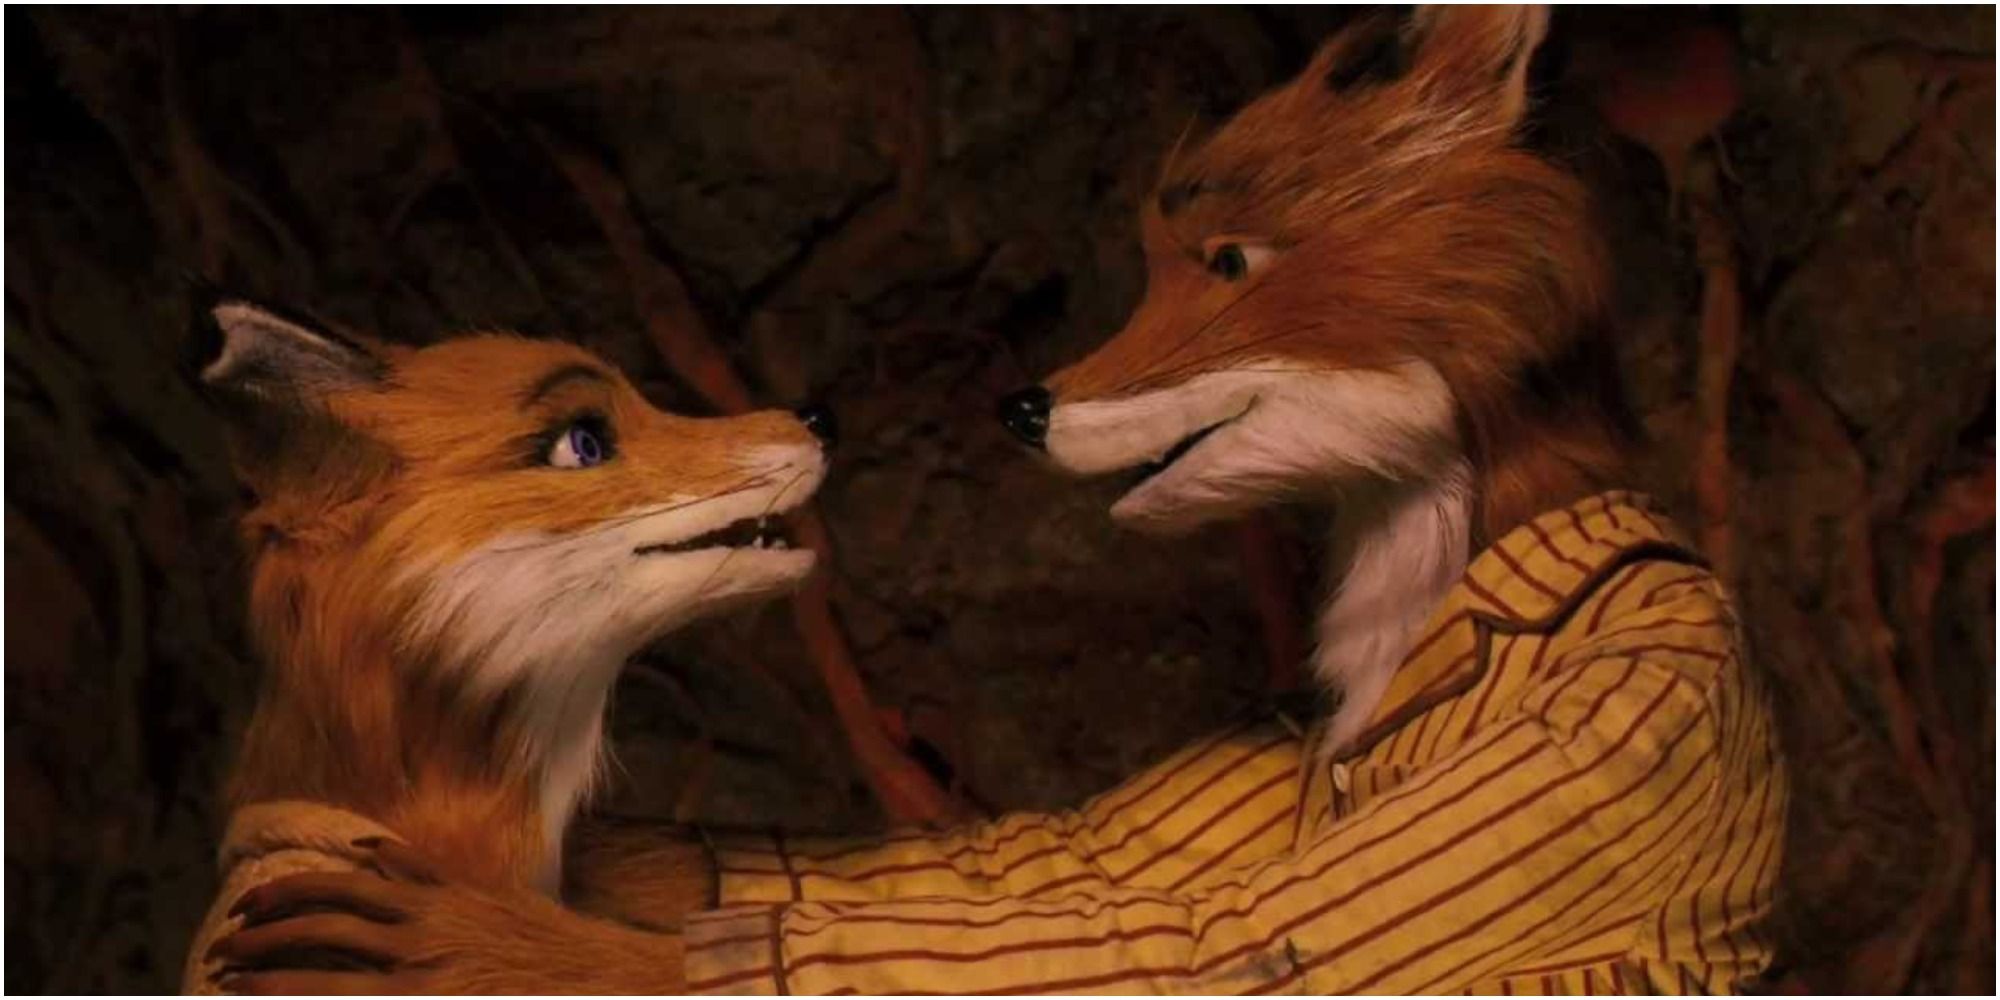 Mr. and Mrs. Fox in Fantastic Mr Fox